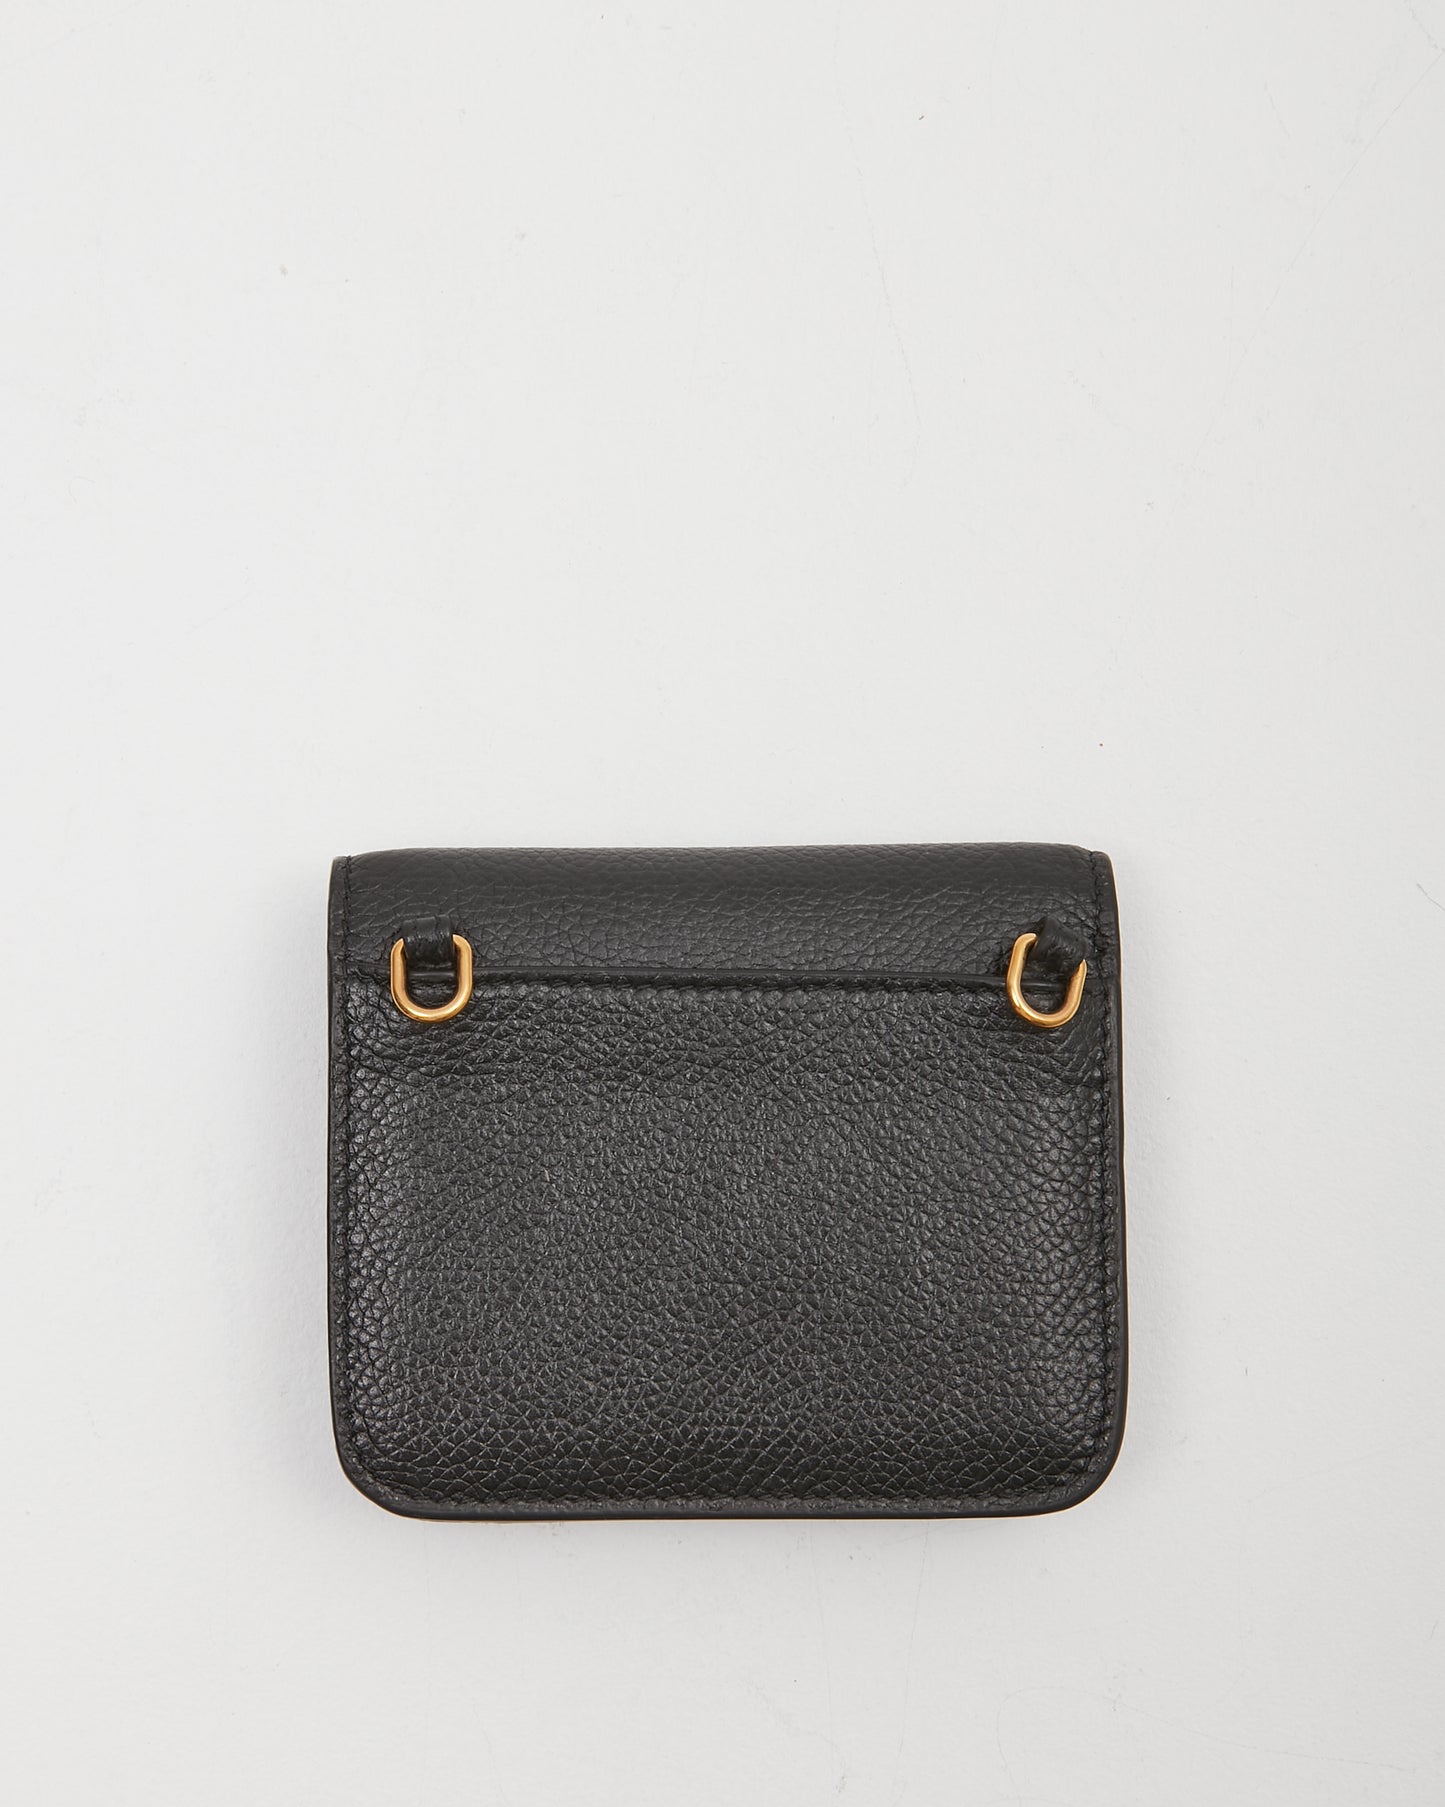 Balenciaga Black Leather Mini Cash Wallet On Chain